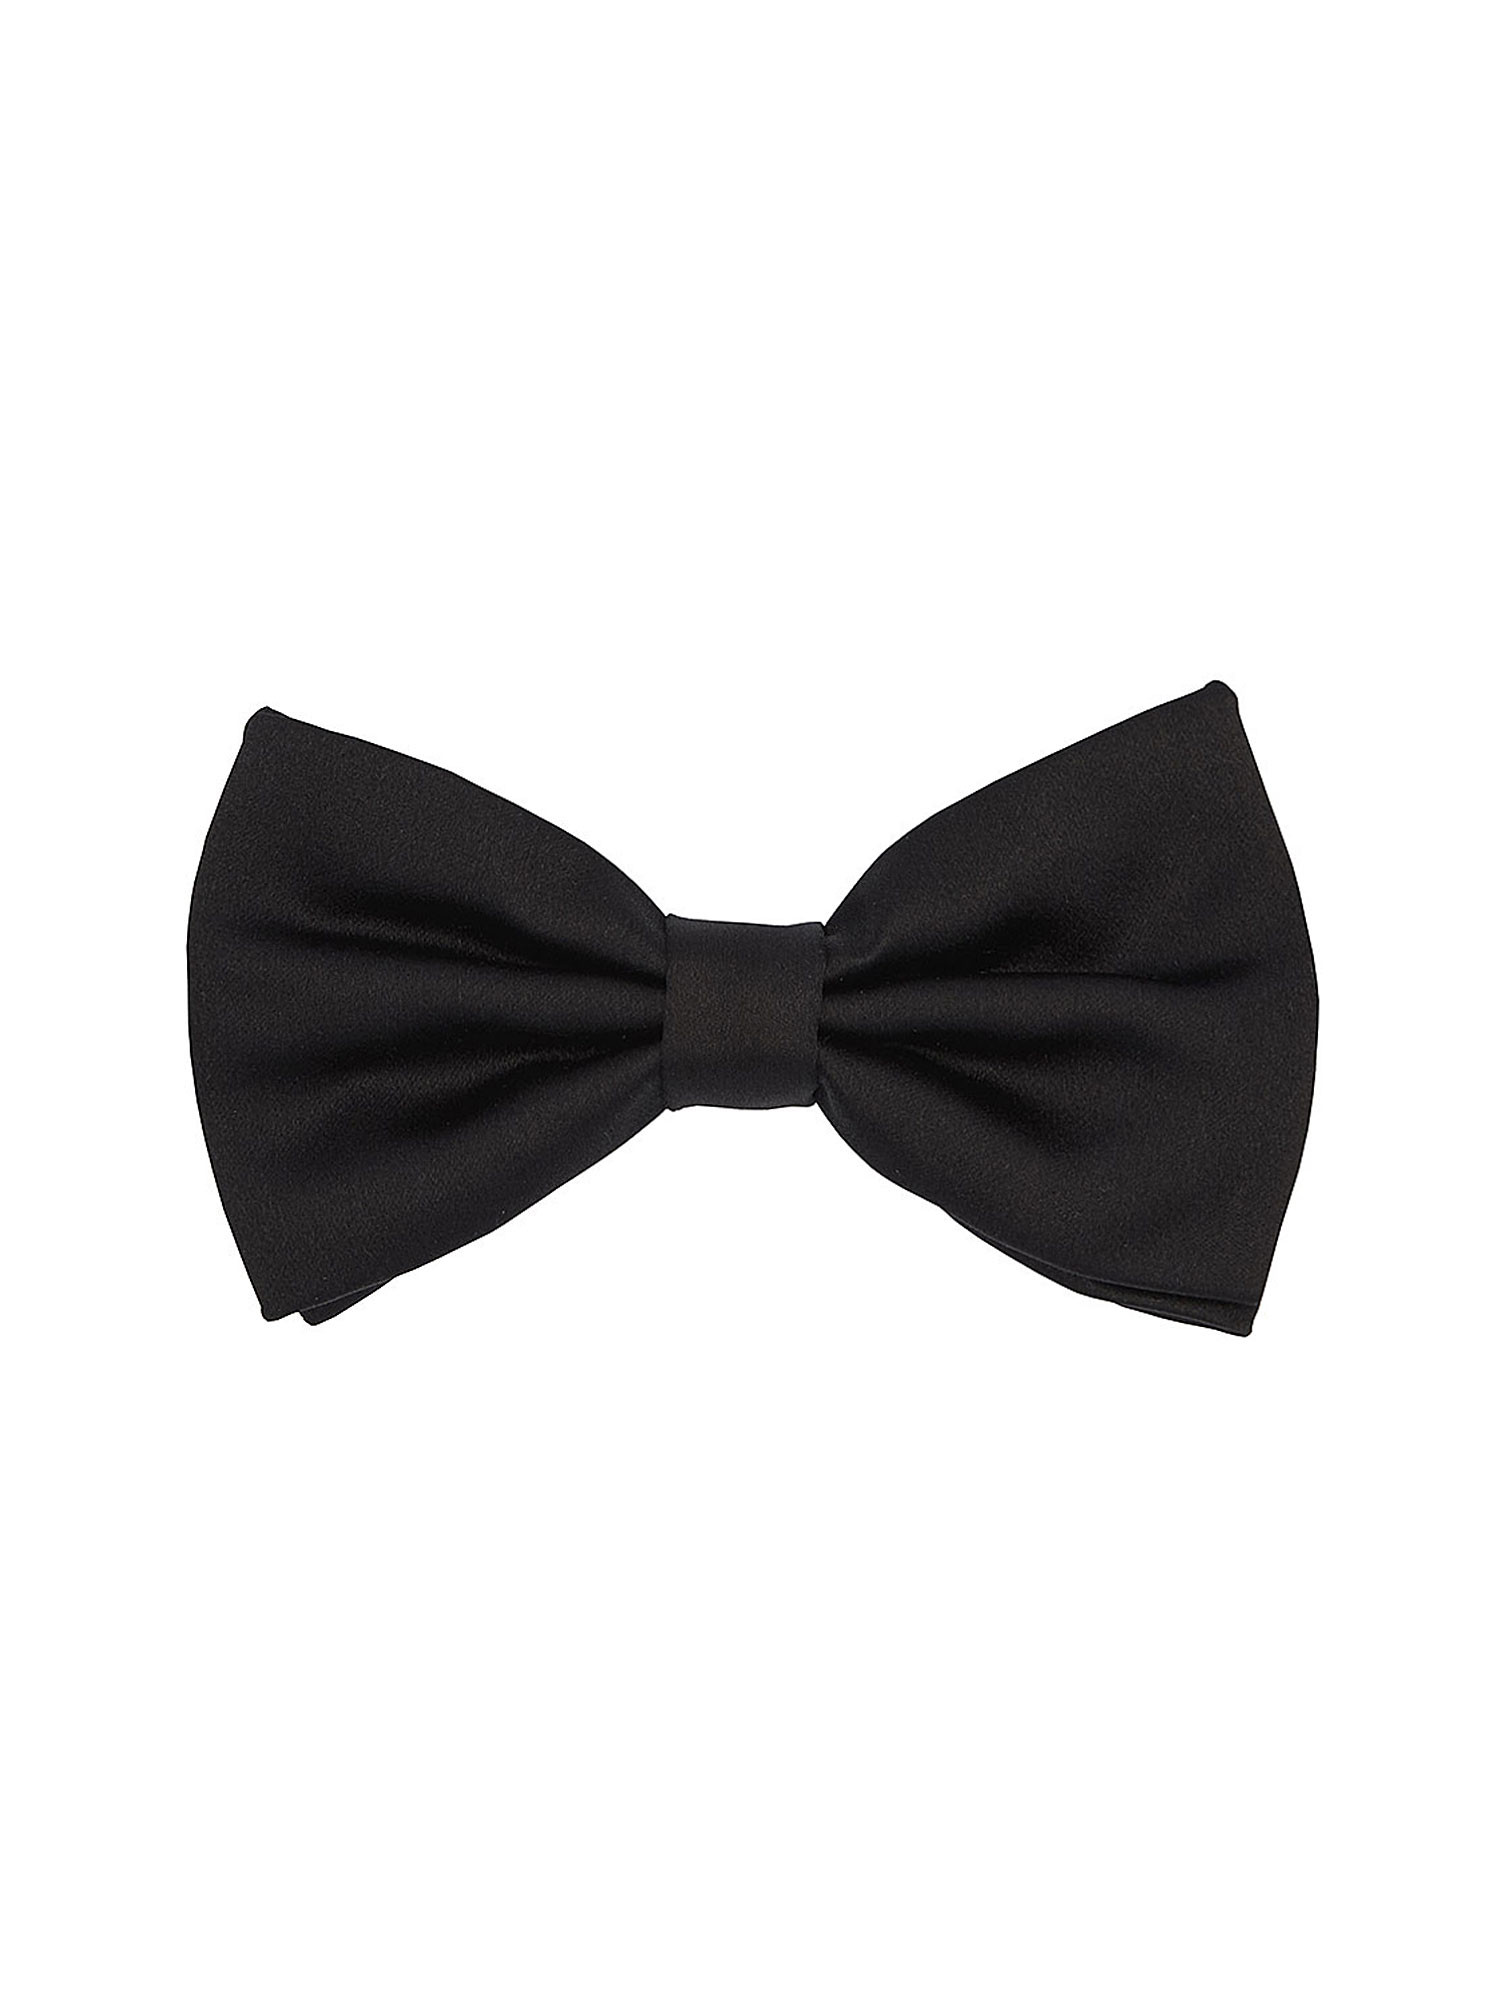 Pre-tied black bow tie 100% silk - Rosi Collection